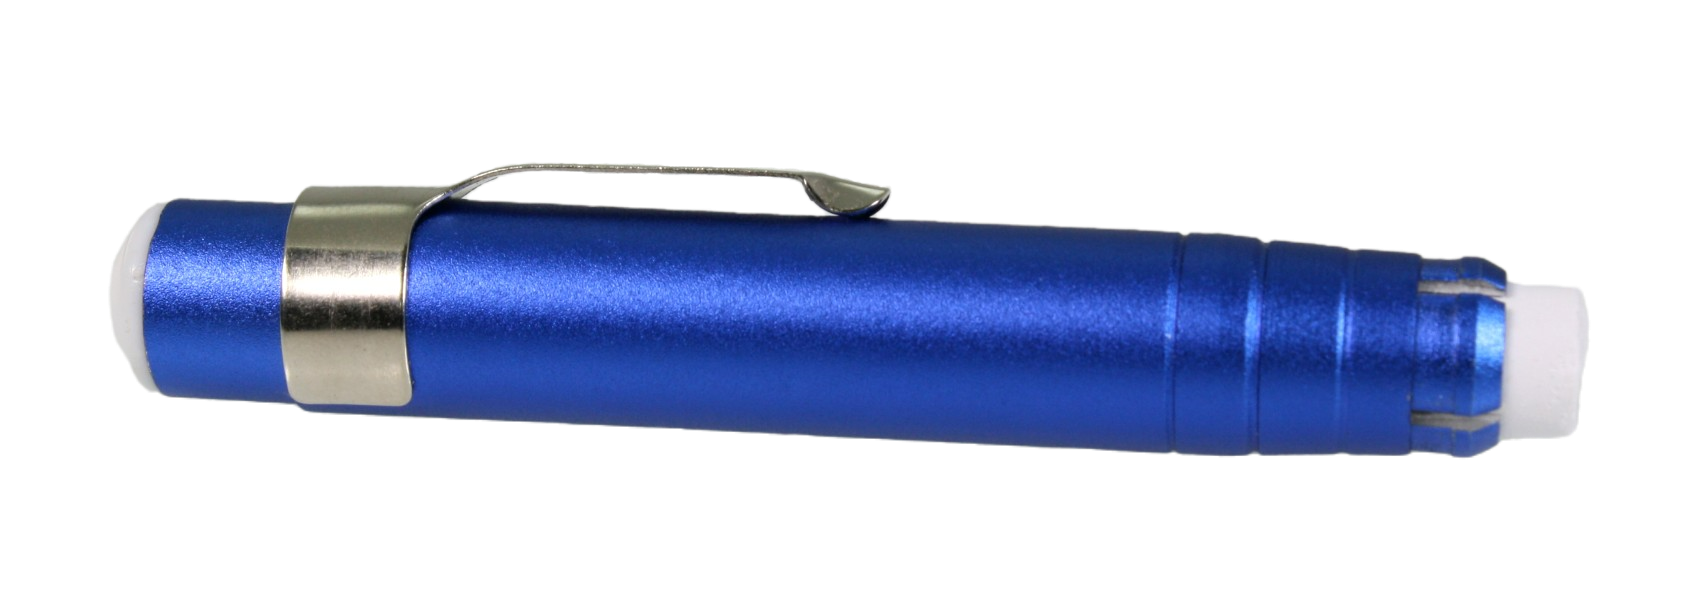 Blue chalk holder, side view